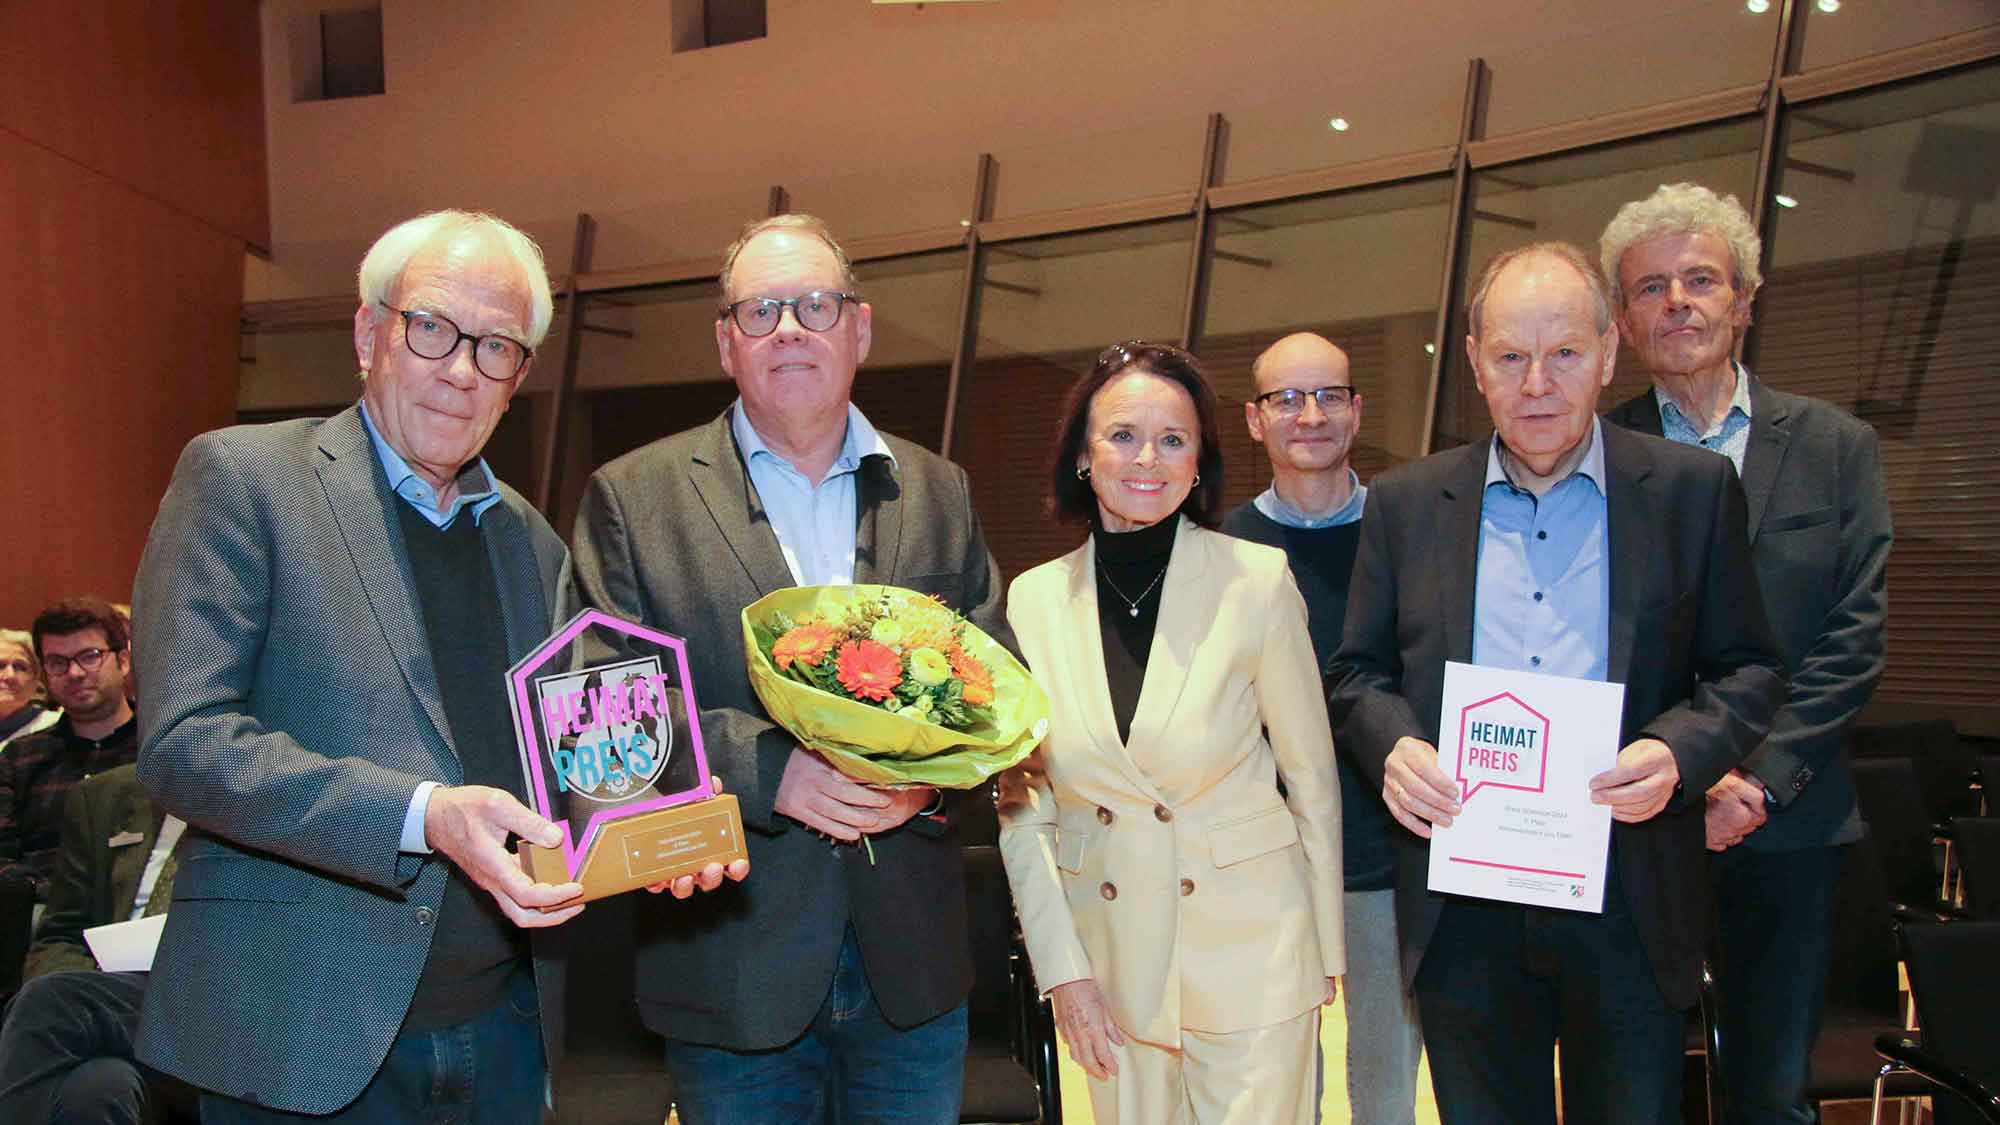 Kreis Gütersloh Heimatpreis NRW, Macher des Holter Meetings gewinnen den 1. Preis